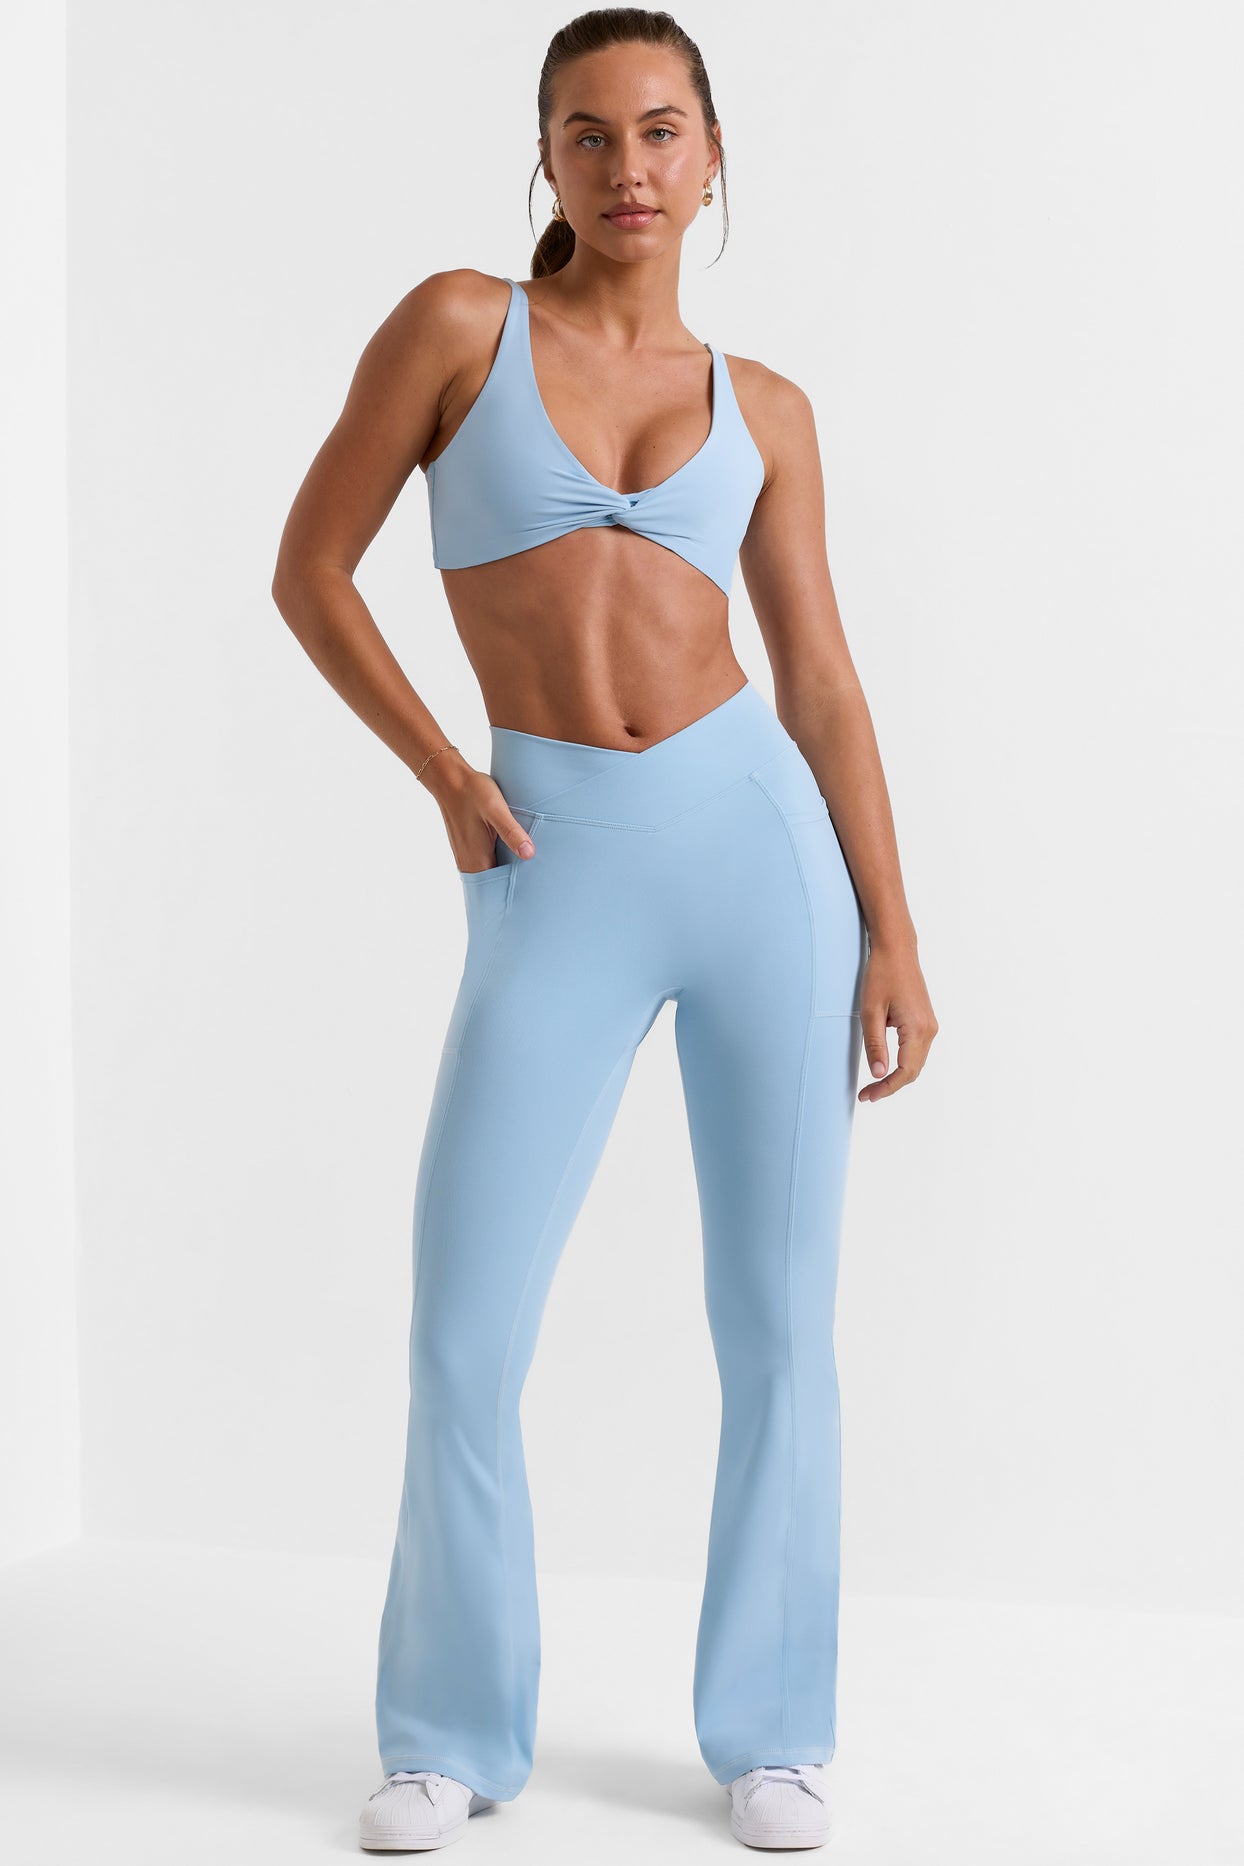 Victoria Sport light blue mesh criss cross athletic workout leggings  pockets S